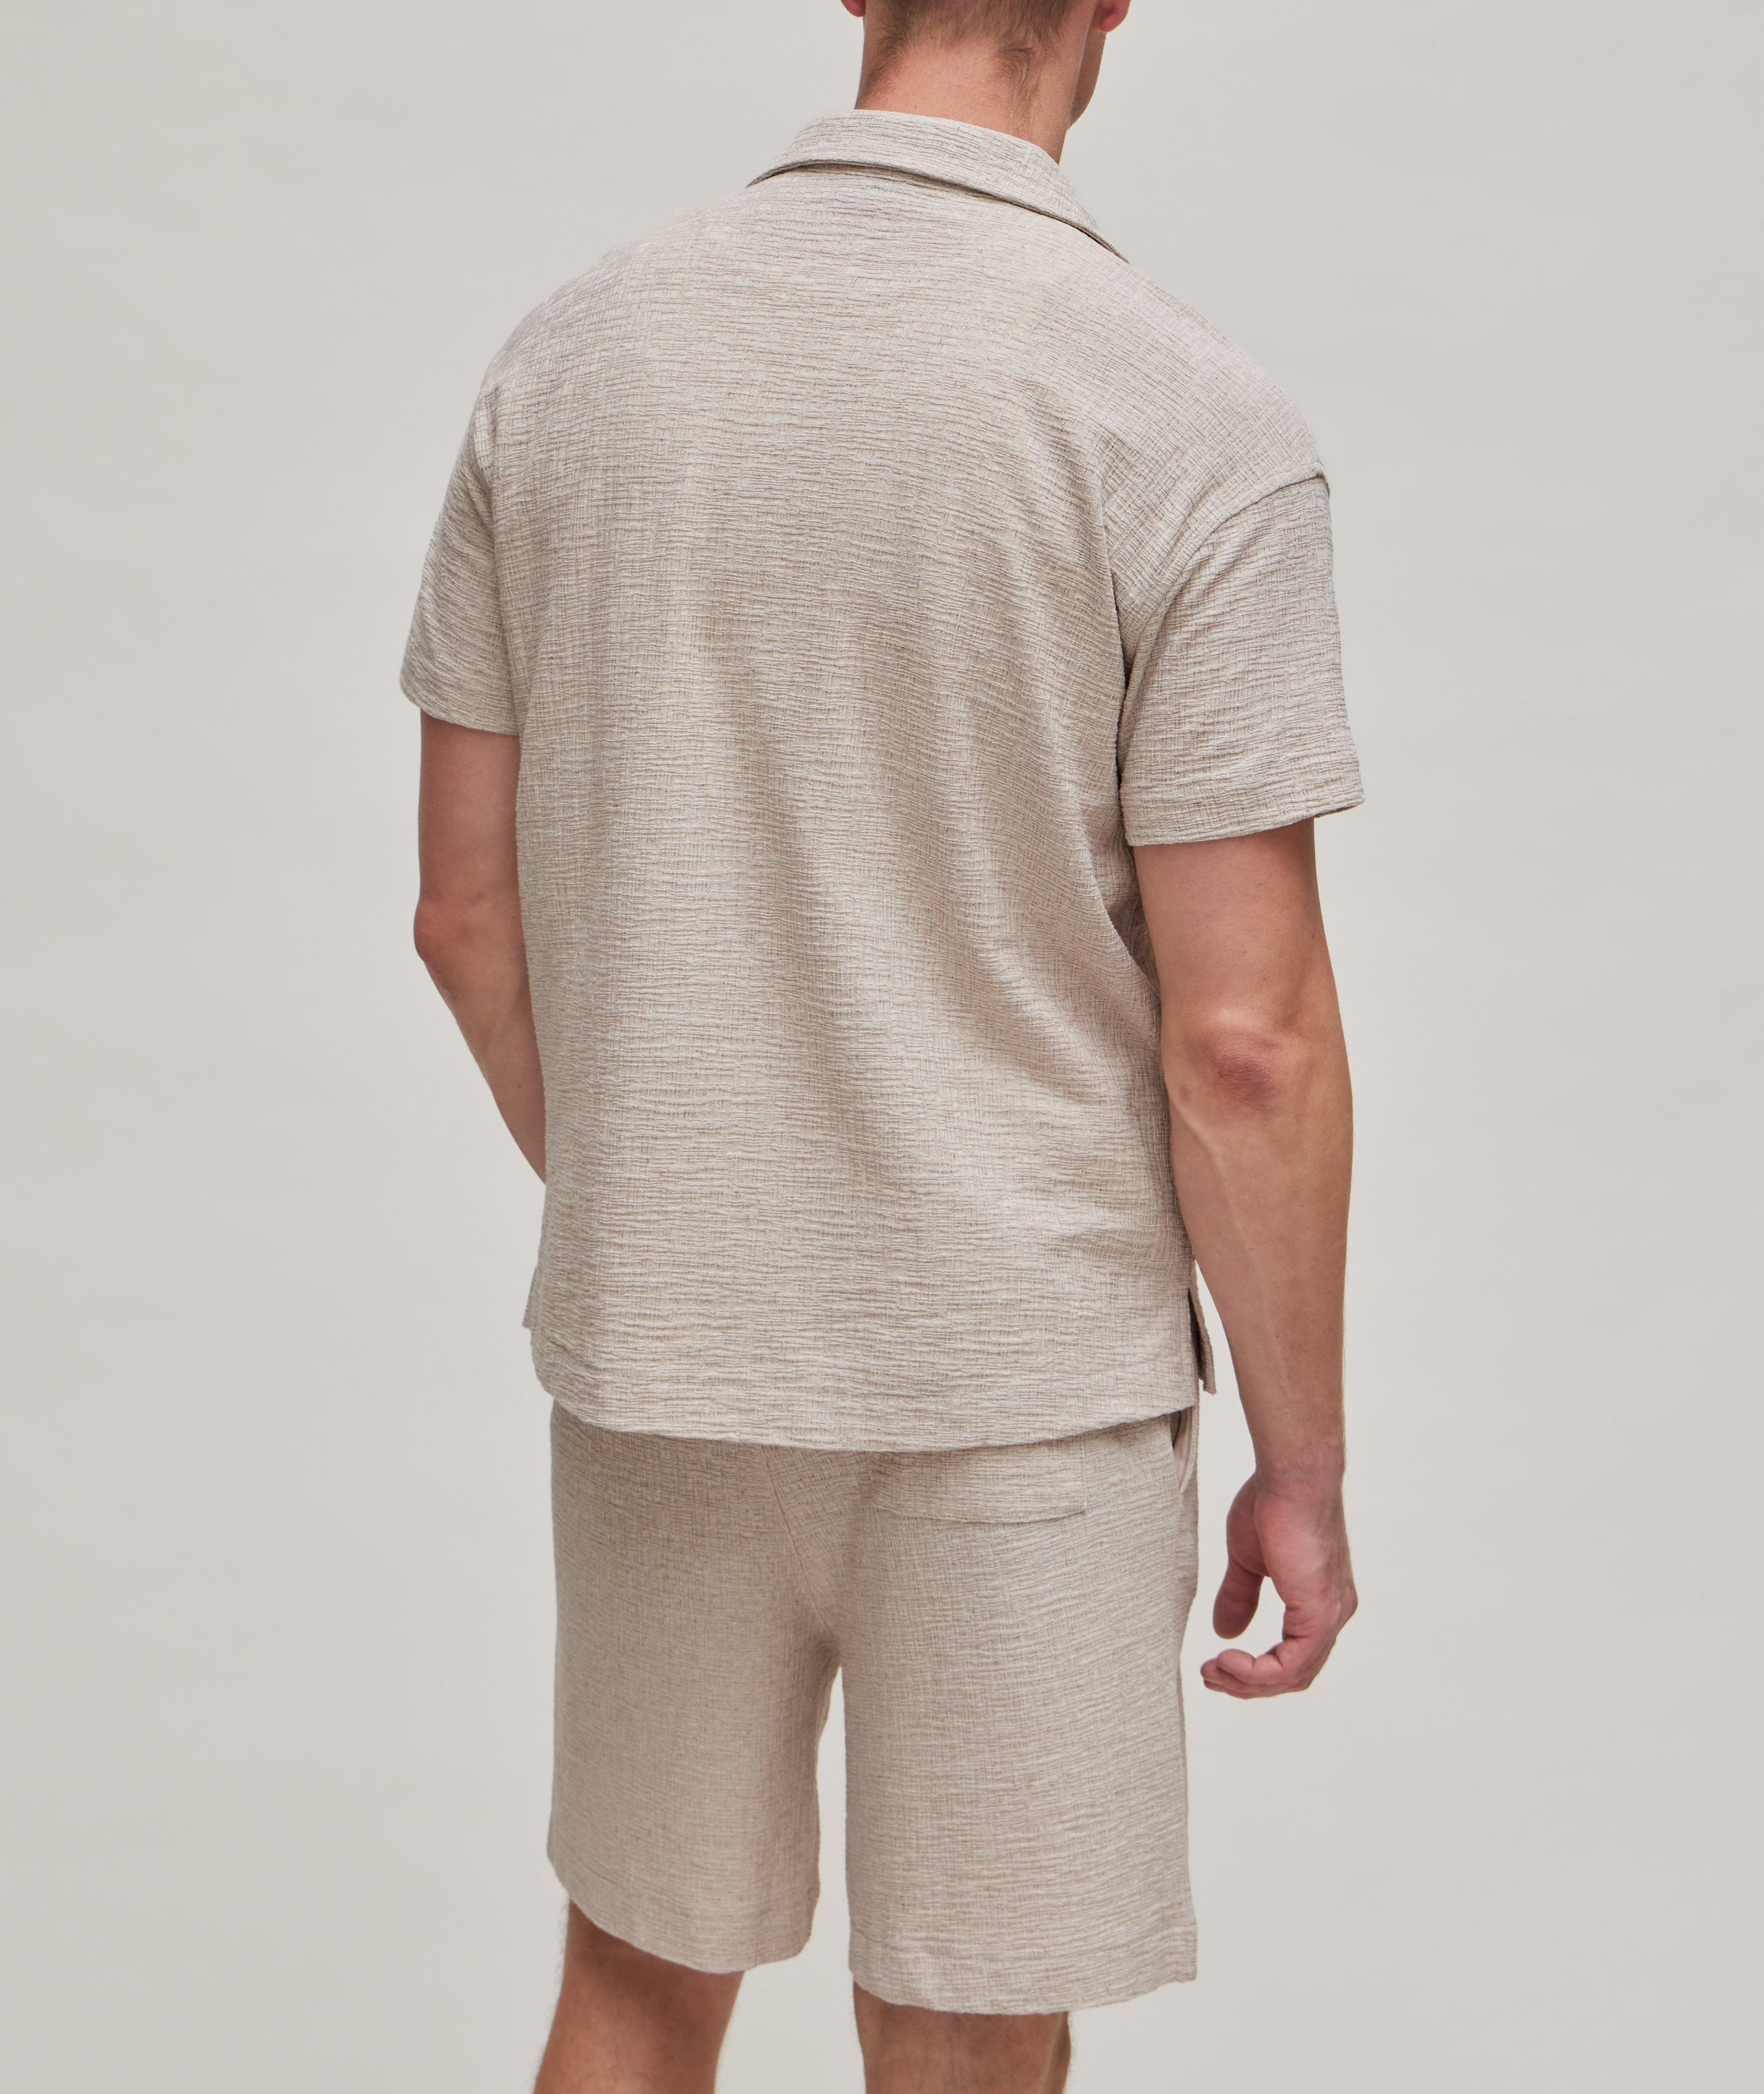 Tate Textured Cotton-Blend Camp Shirt  image 2